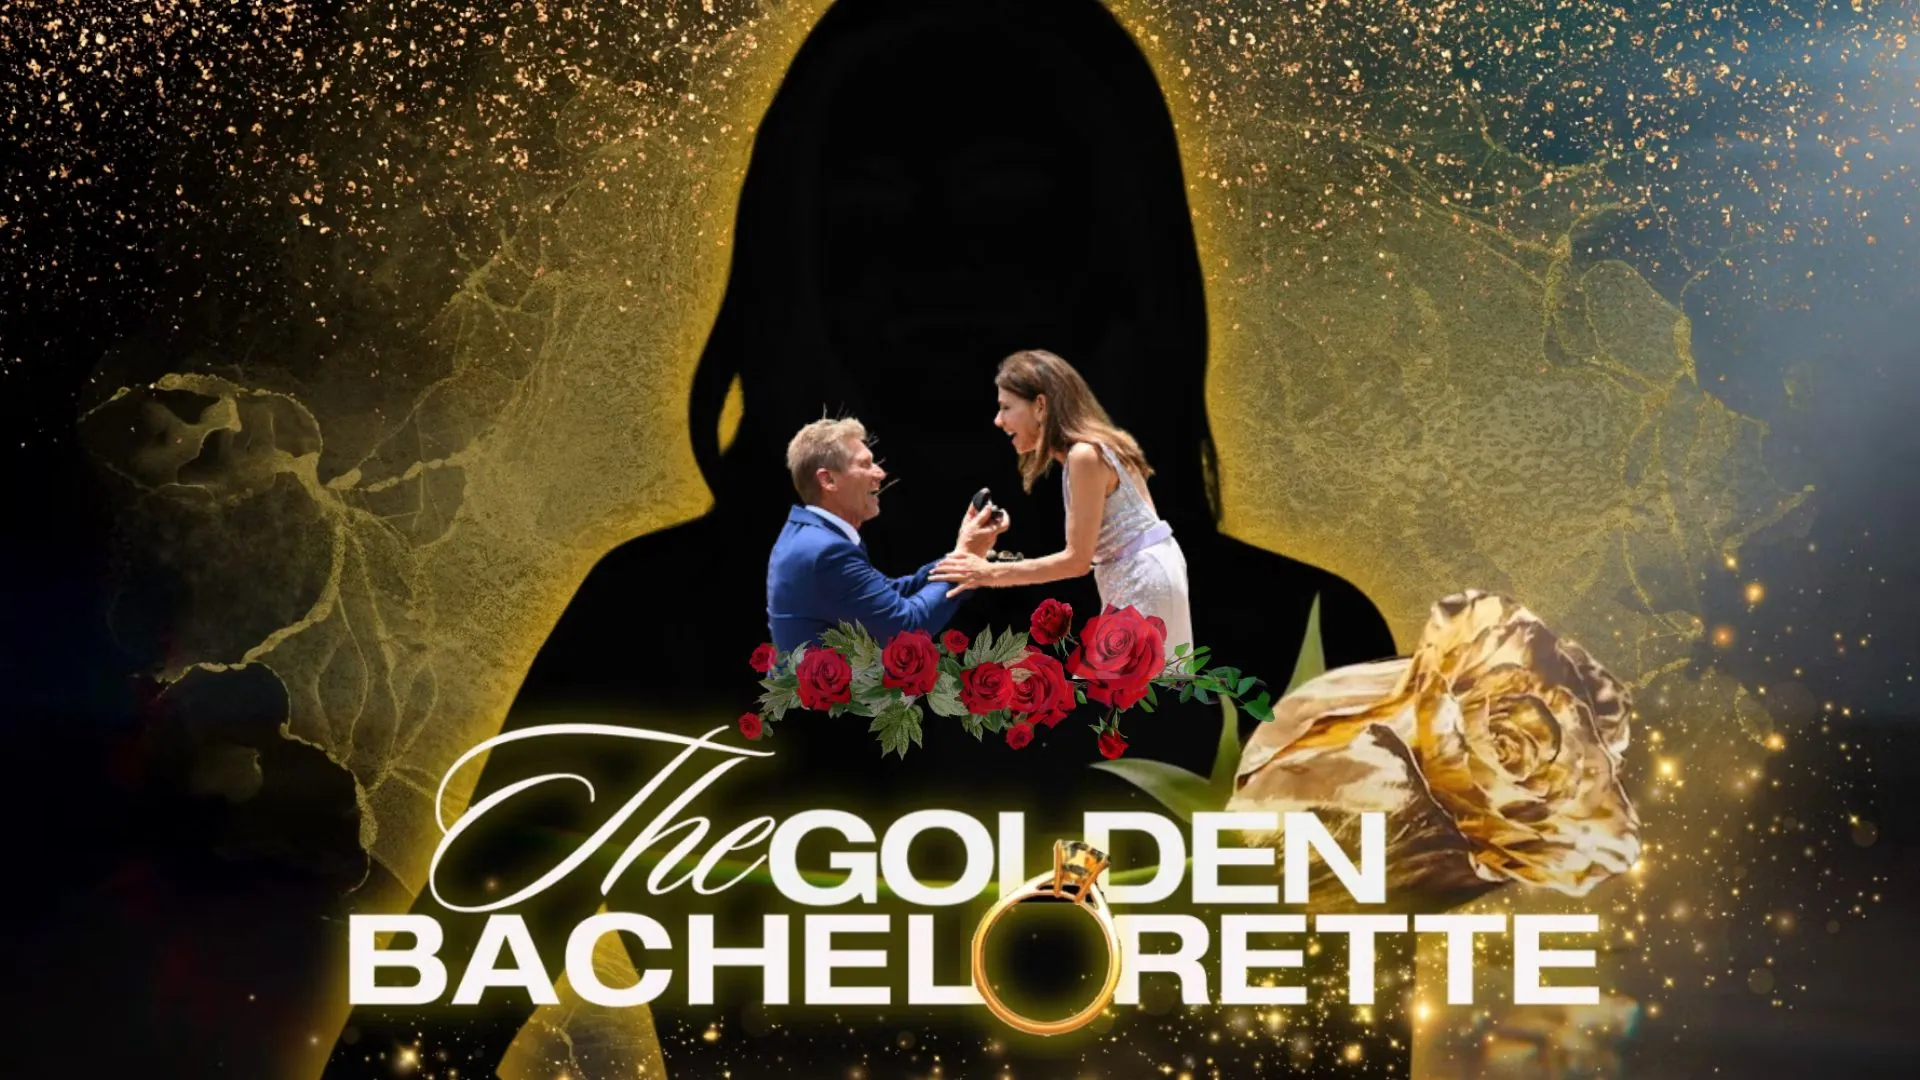 The Golden Bachelorette Still a Mystery, But Filming Soon